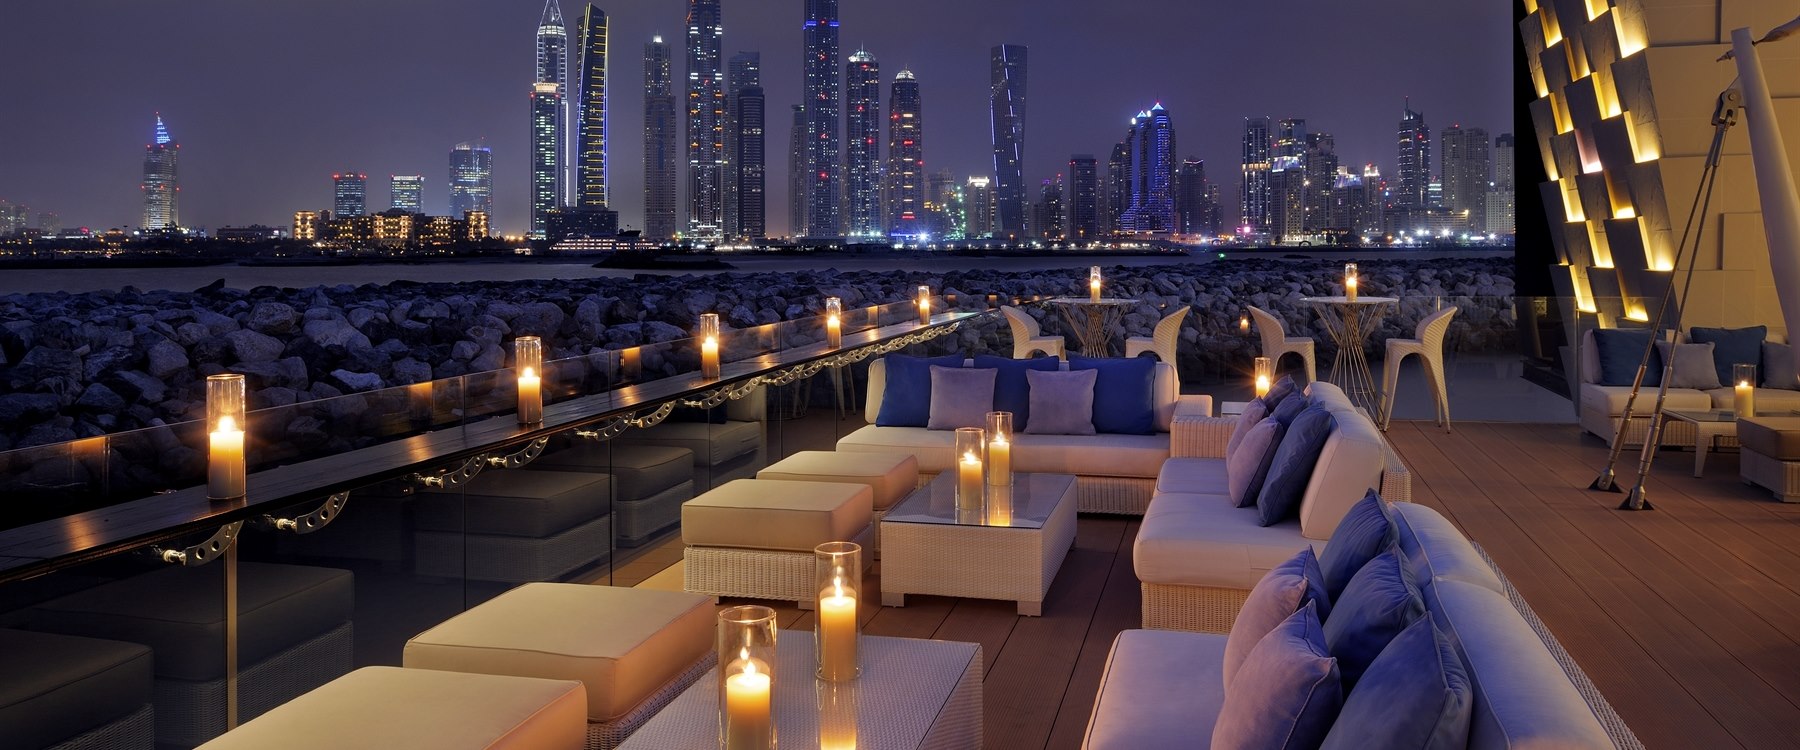 Sky Bar at One&Only The Palm, Dubai